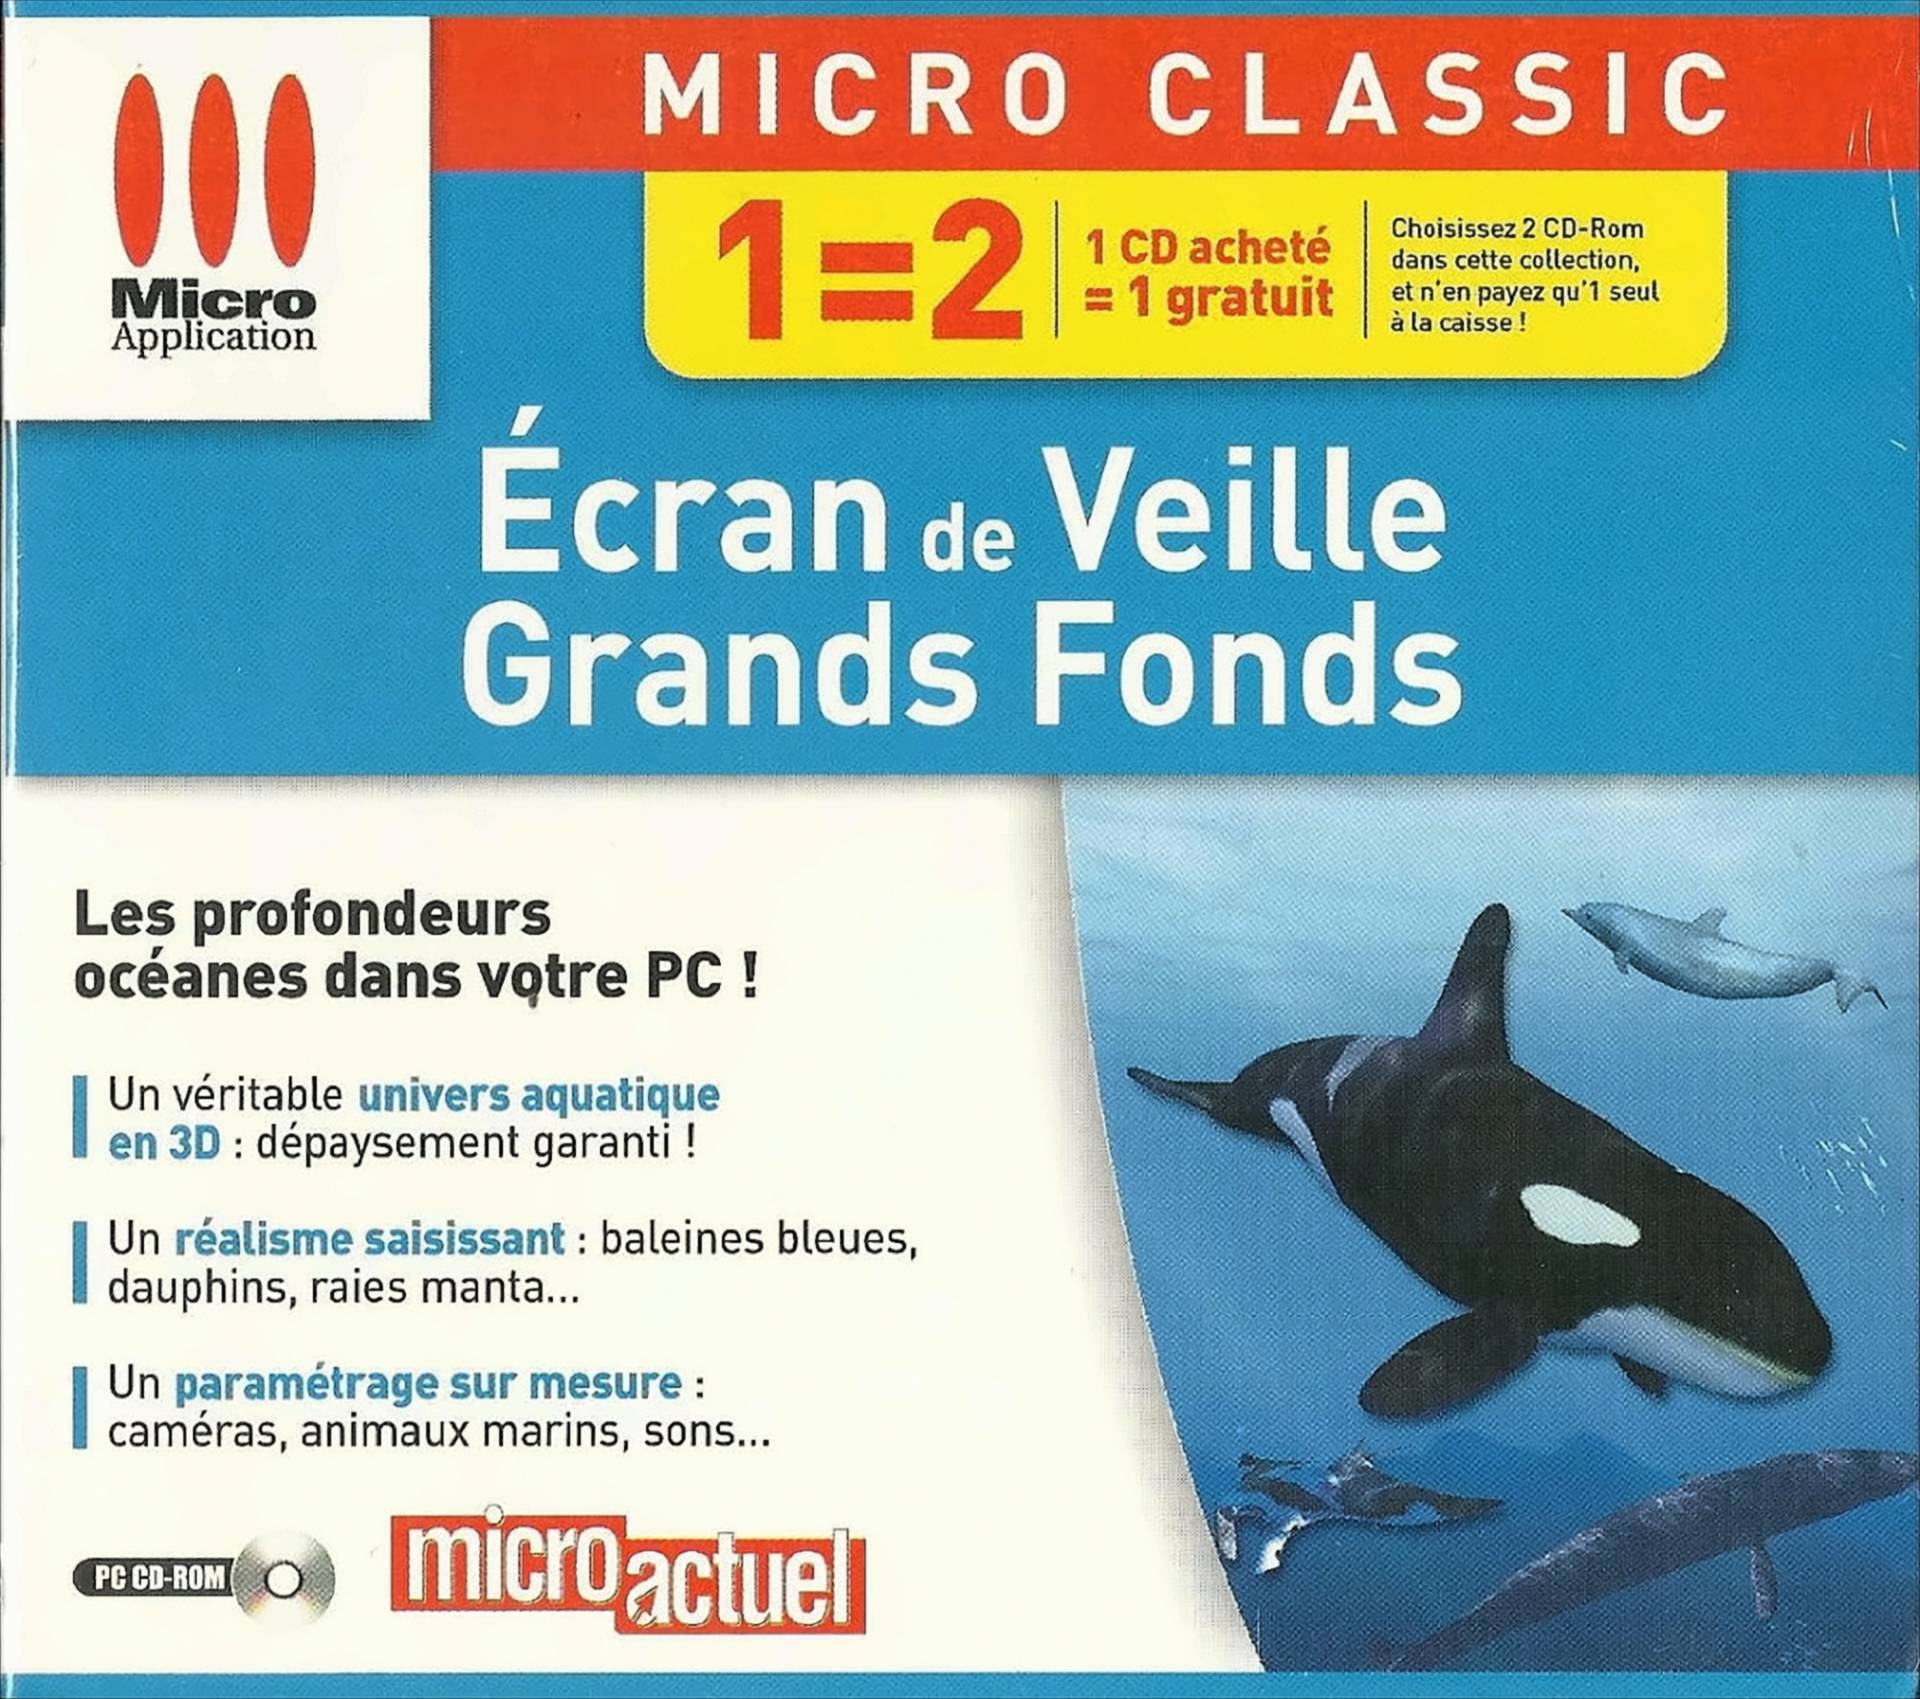 Ecran de veille Grands fonds (französische Version) von MicroApplication